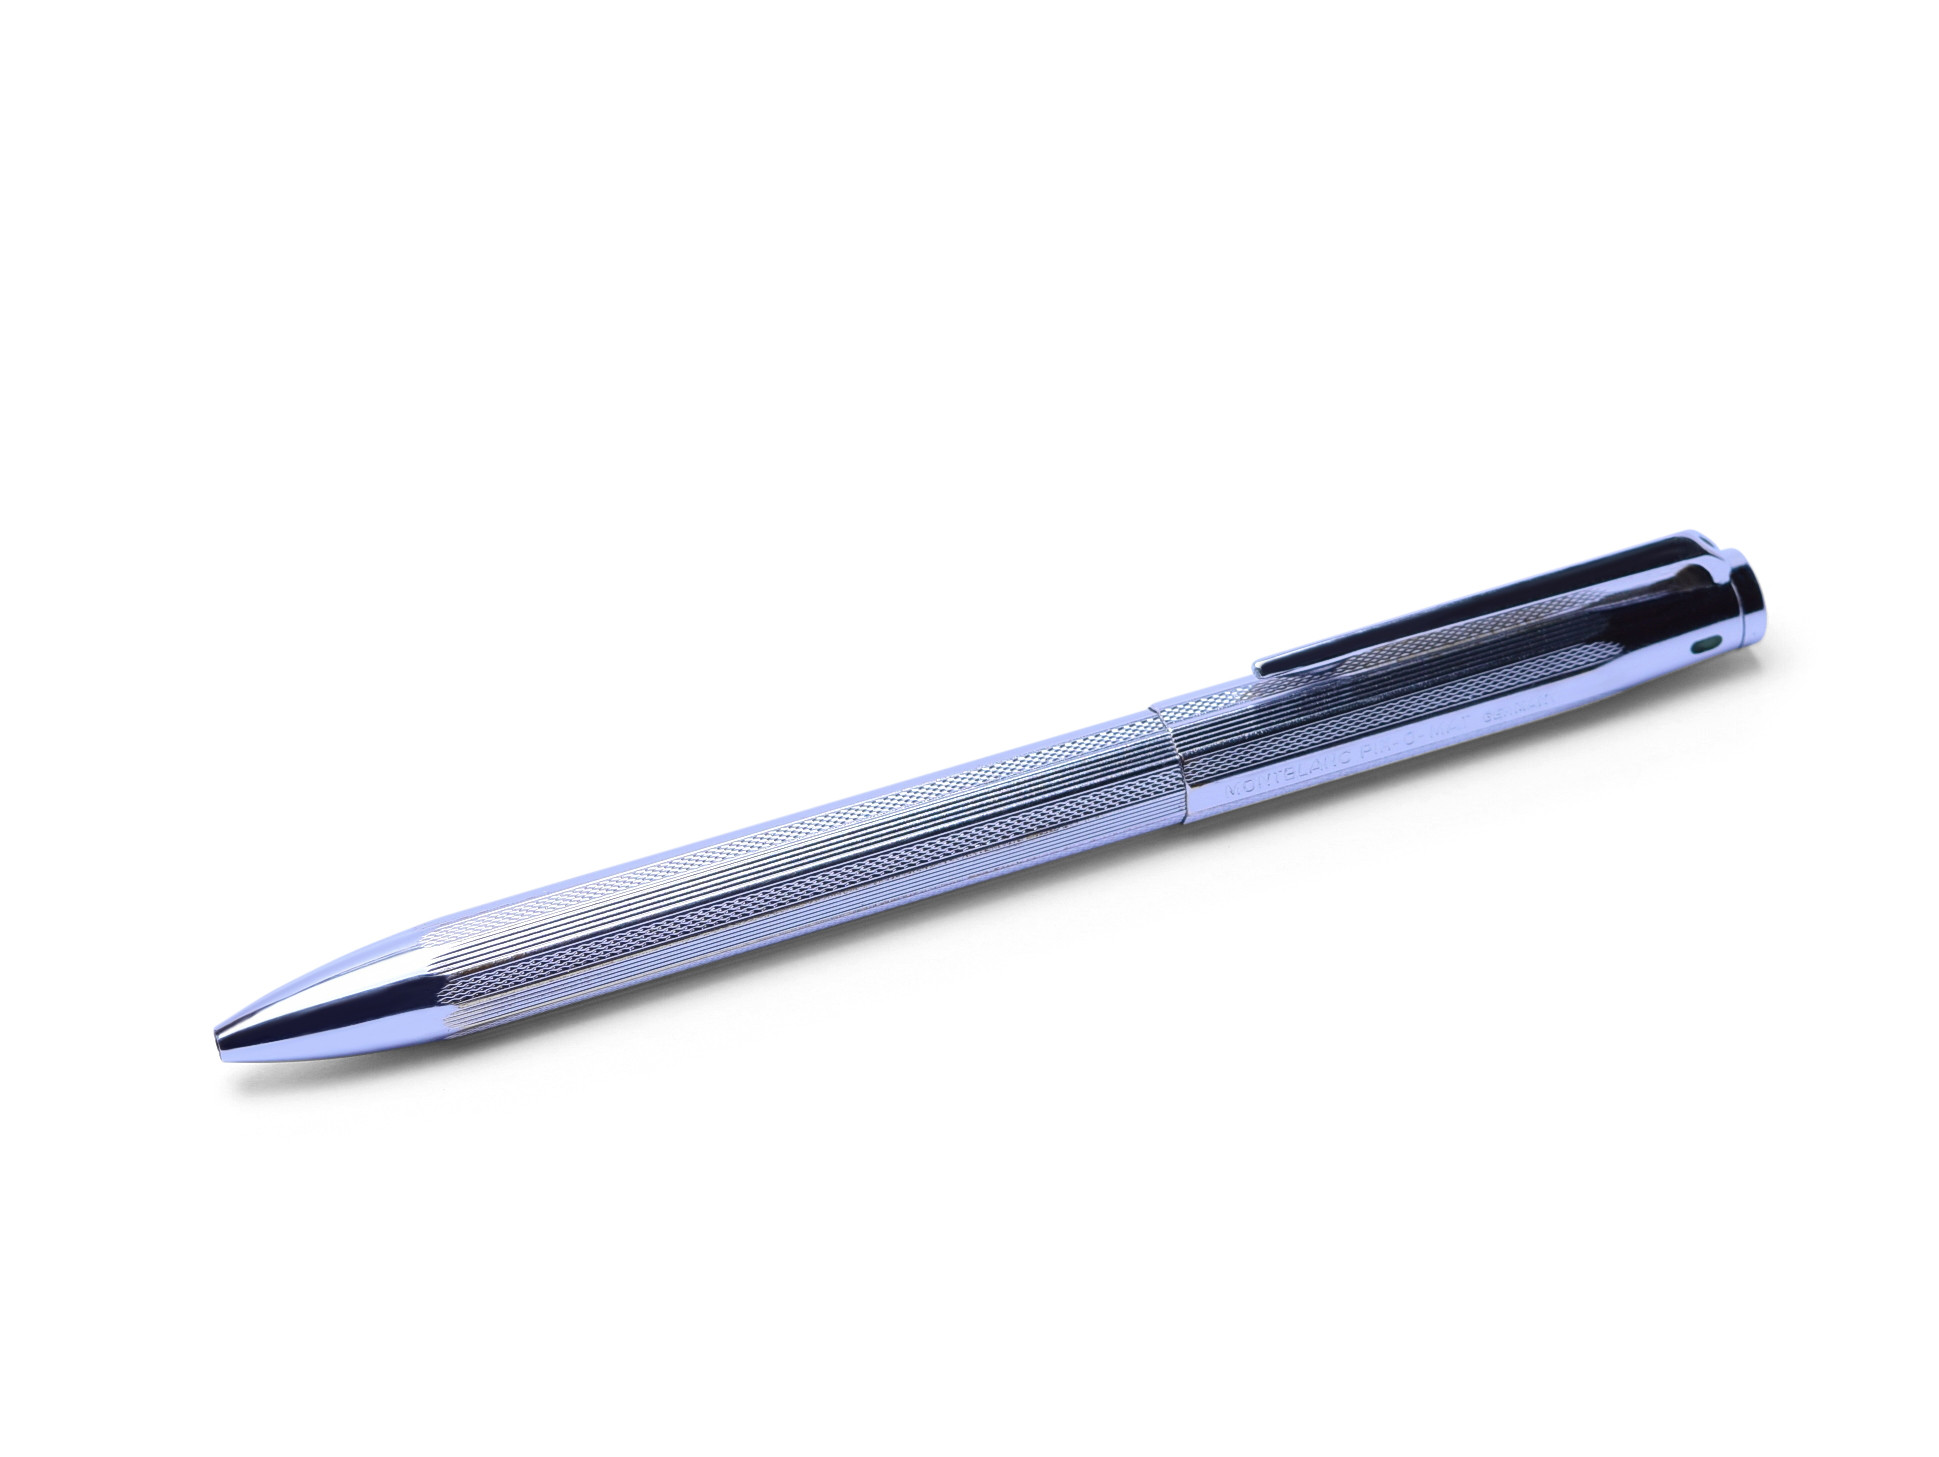 Orbitor 4-Color Pen - Opaque